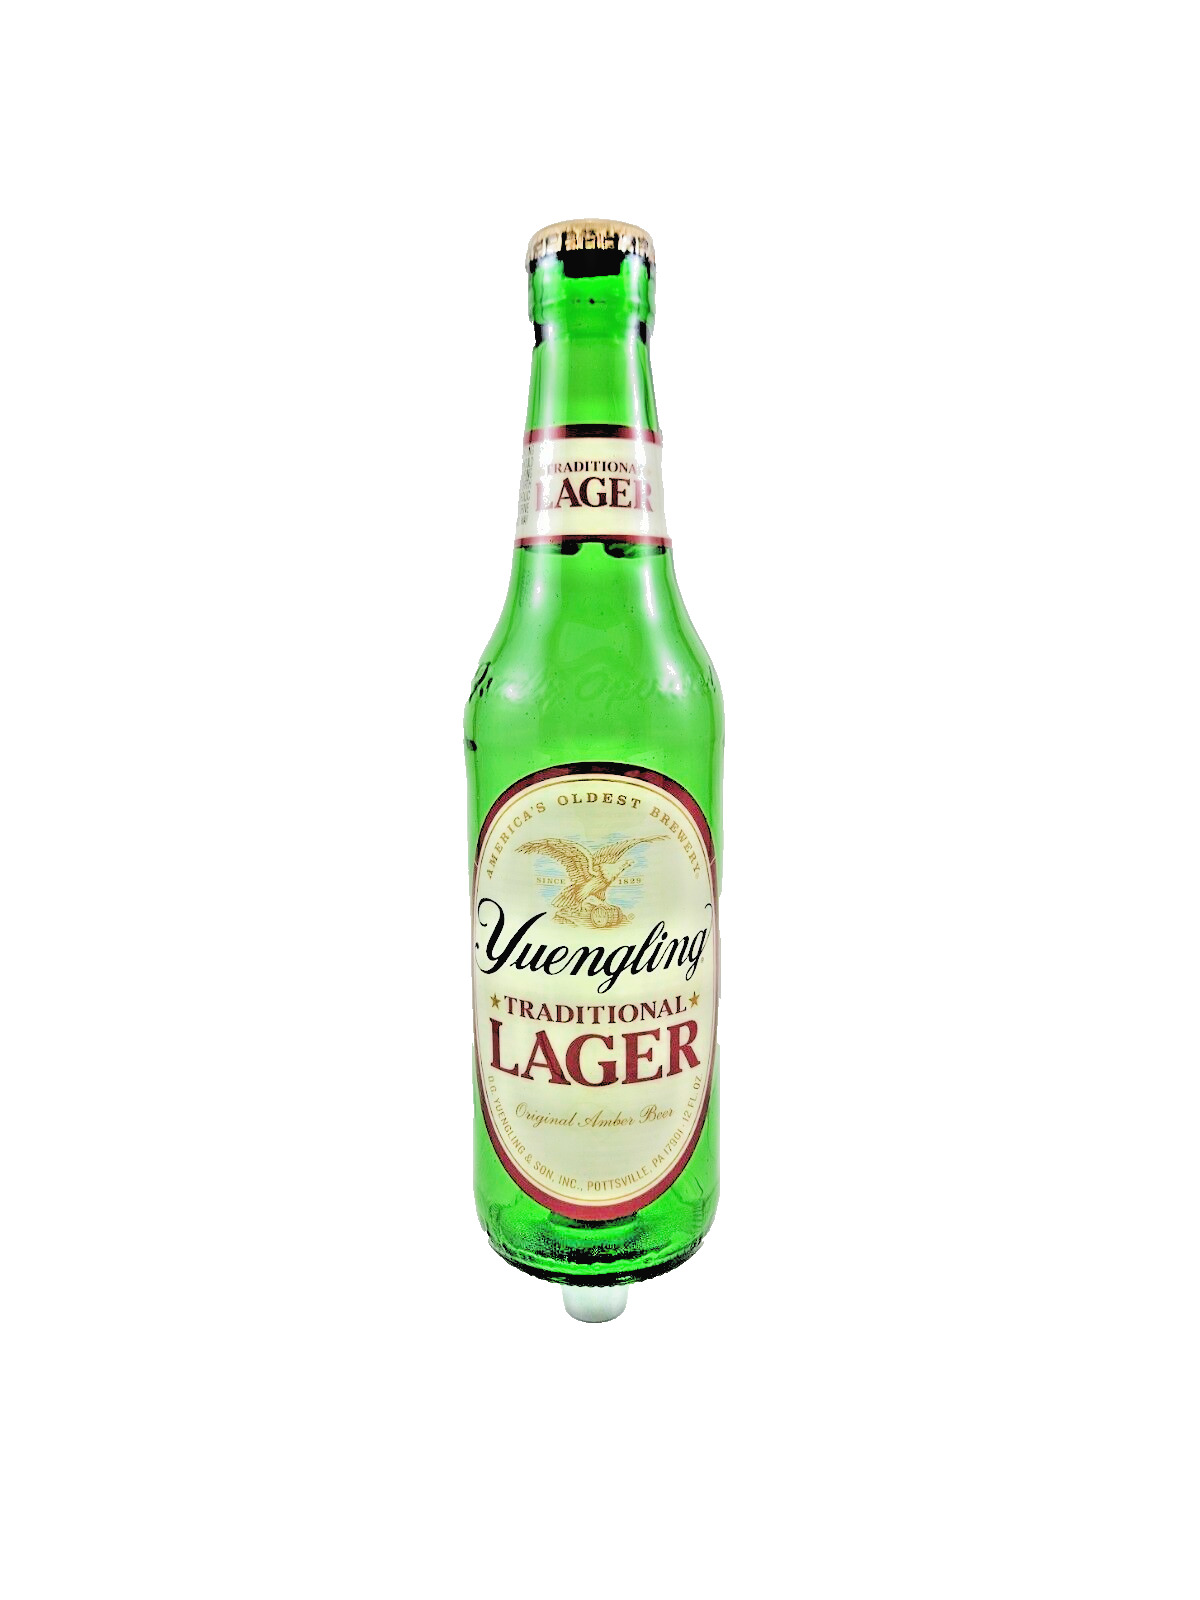 Yuengling Lager beer tap handle. Kegerator Handle, Wedding, Bar Restaurant Keg